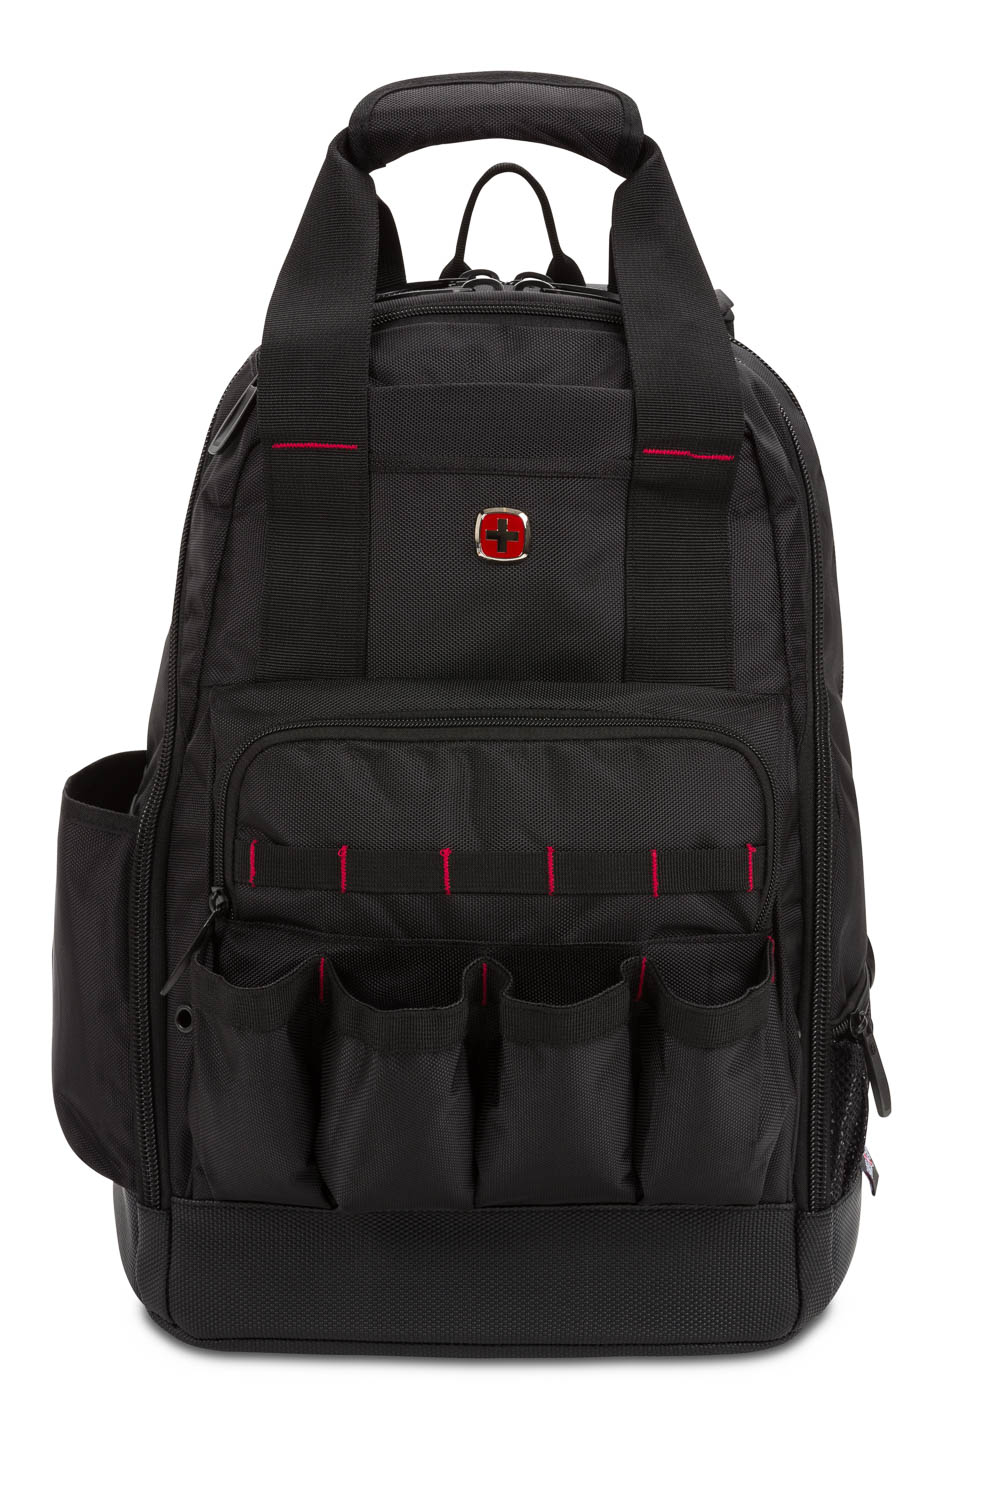 Work Pack Tool Backpack - Black - Swissgear.com